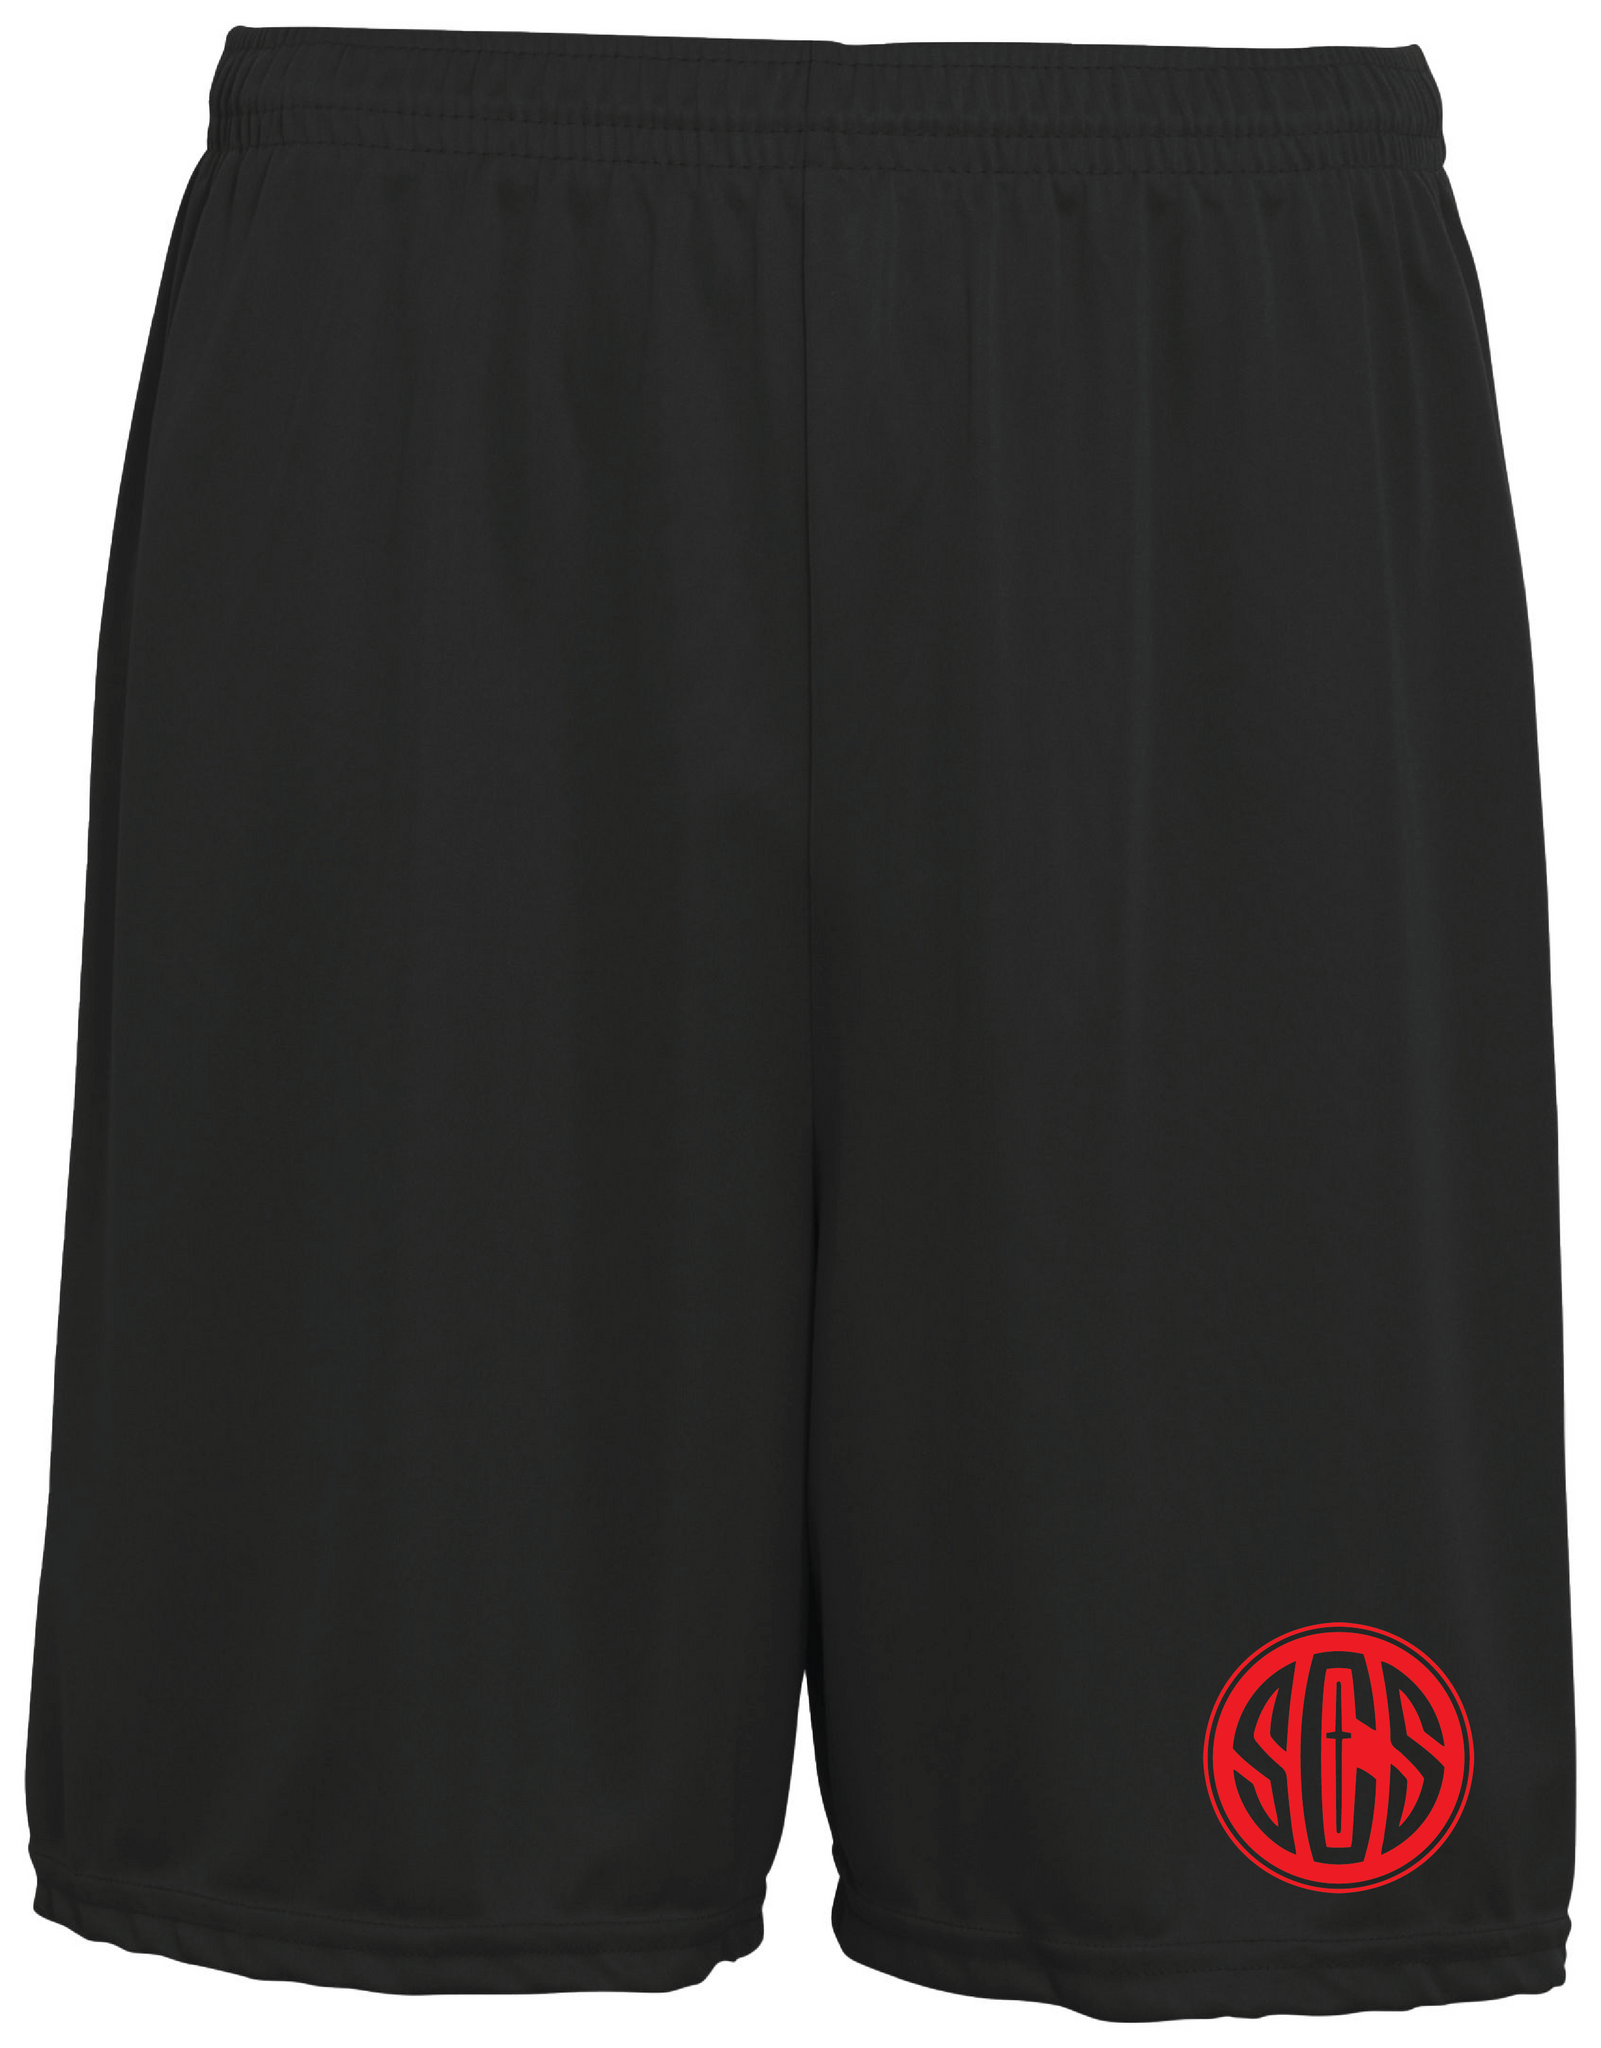 Augusta Sportswear Octane Shorts - Black